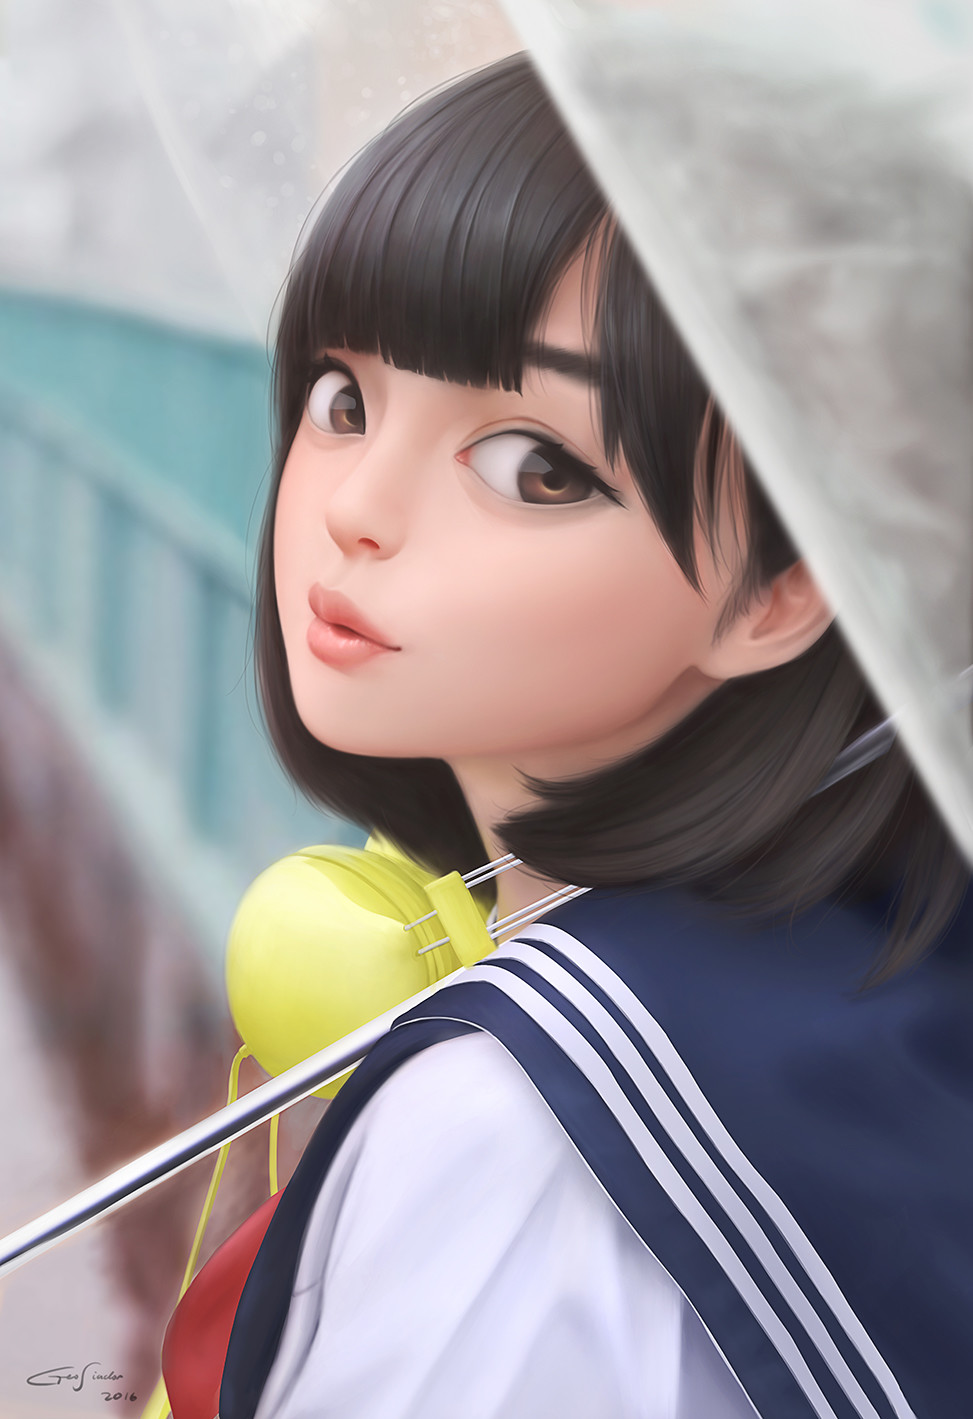 Realistic Anime Girl Digital Art